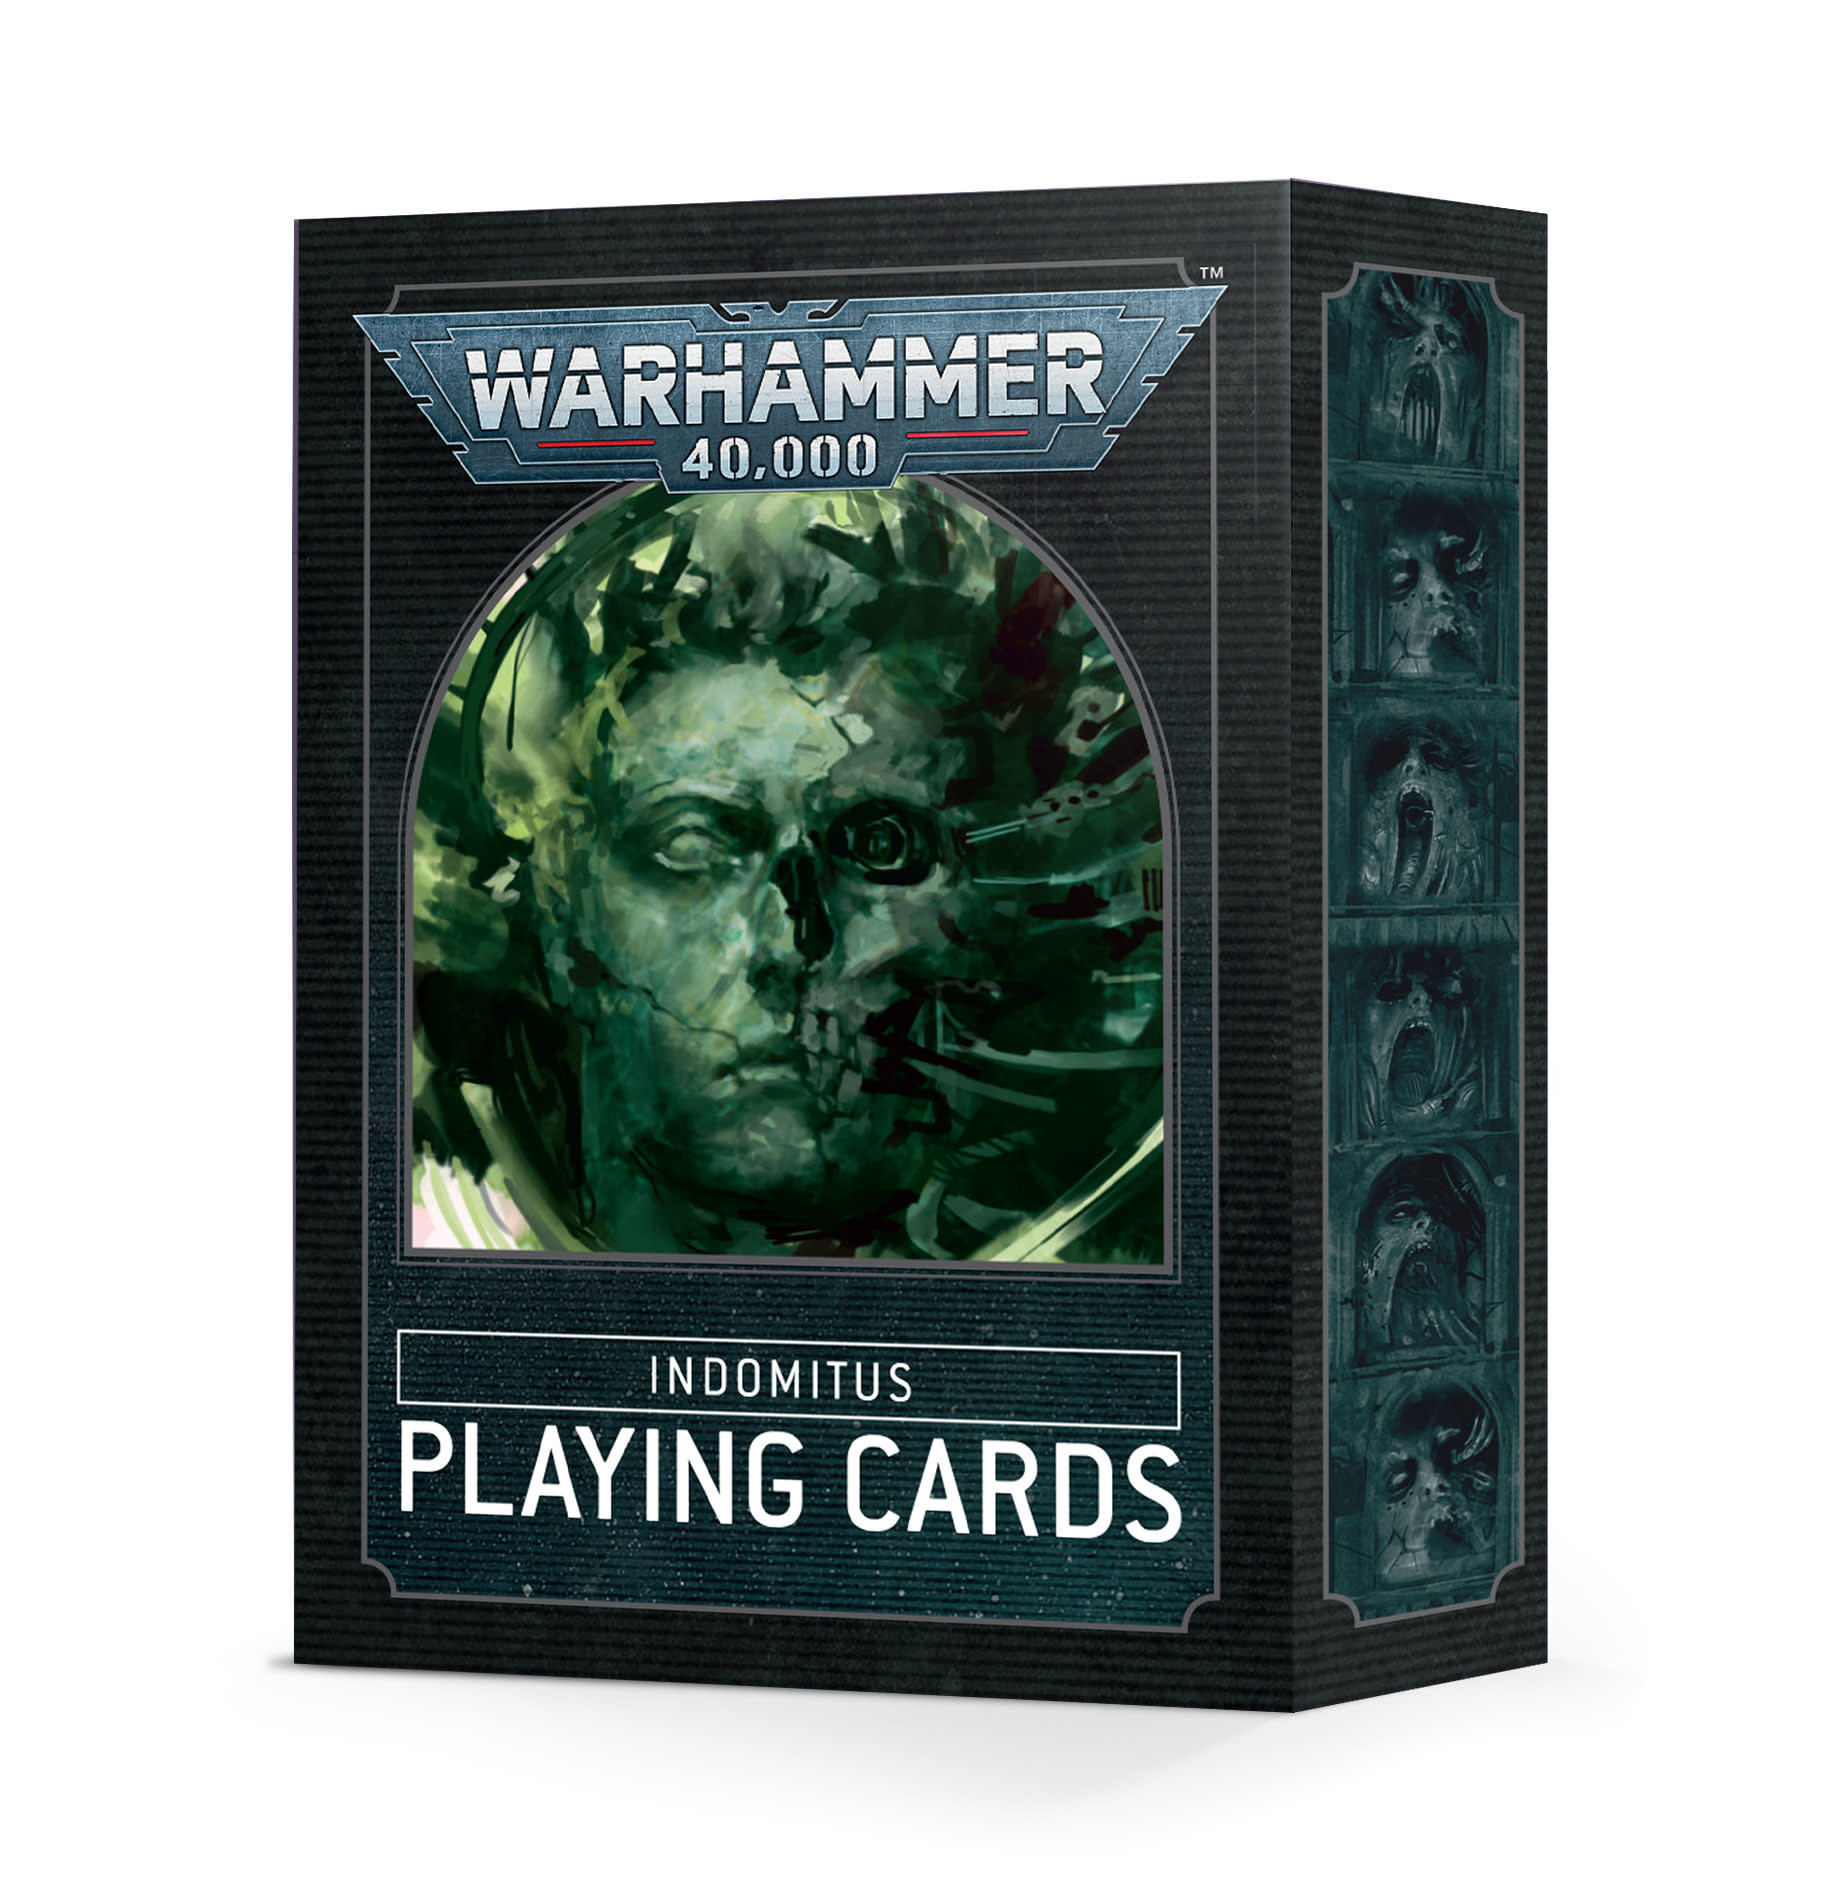 Warhammer cards. Warhammer 40000: Indomitus playing Cards. Игральные карты Warhammer. Игральные карты вархаммер.